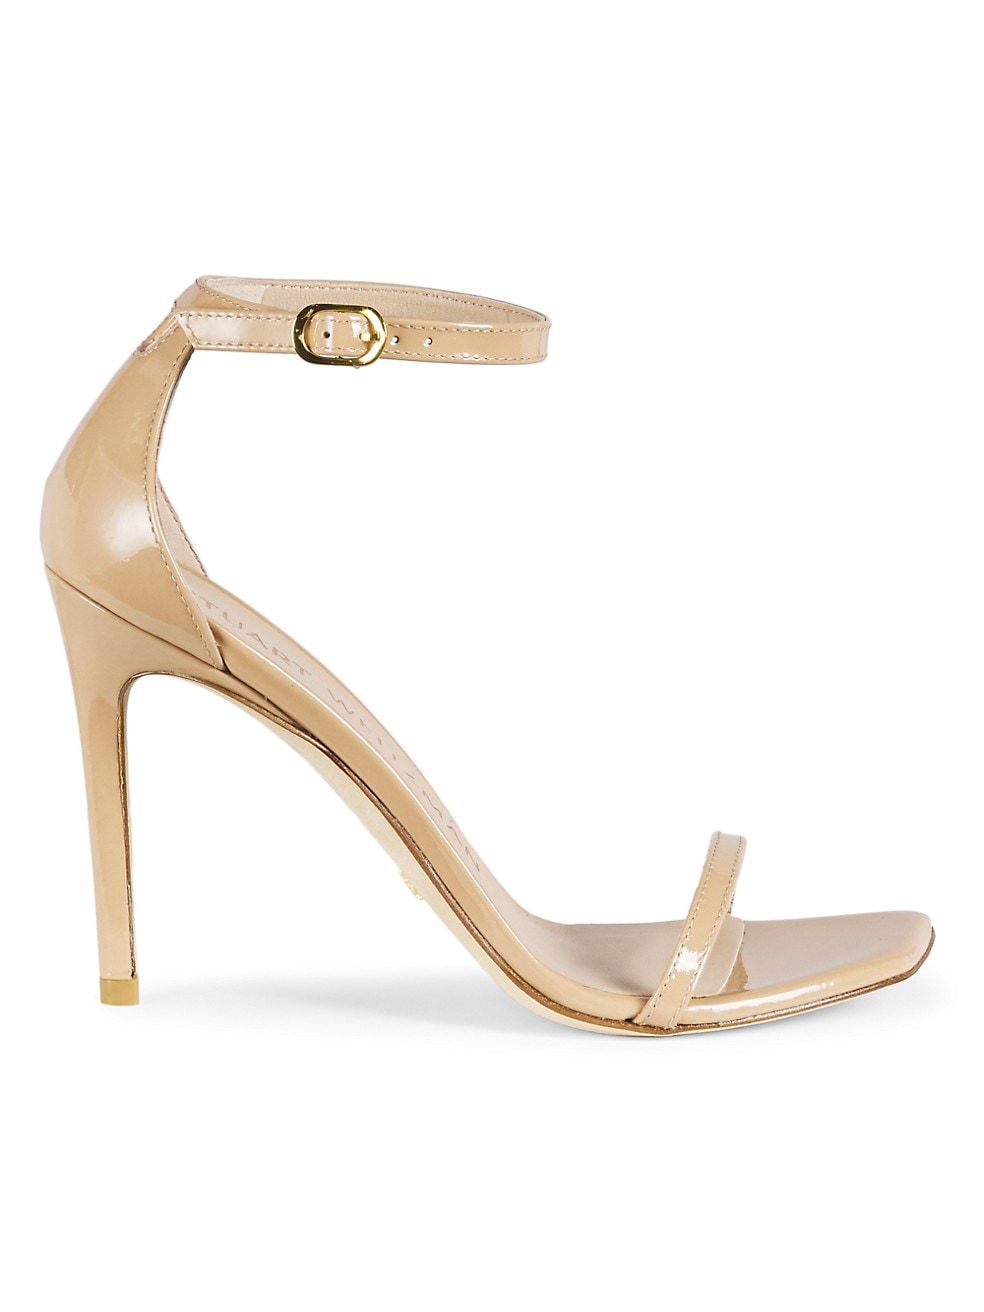 Nudistcurve Patent Leather Ankle-Strap Stiletto Sandals | Saks Fifth Avenue